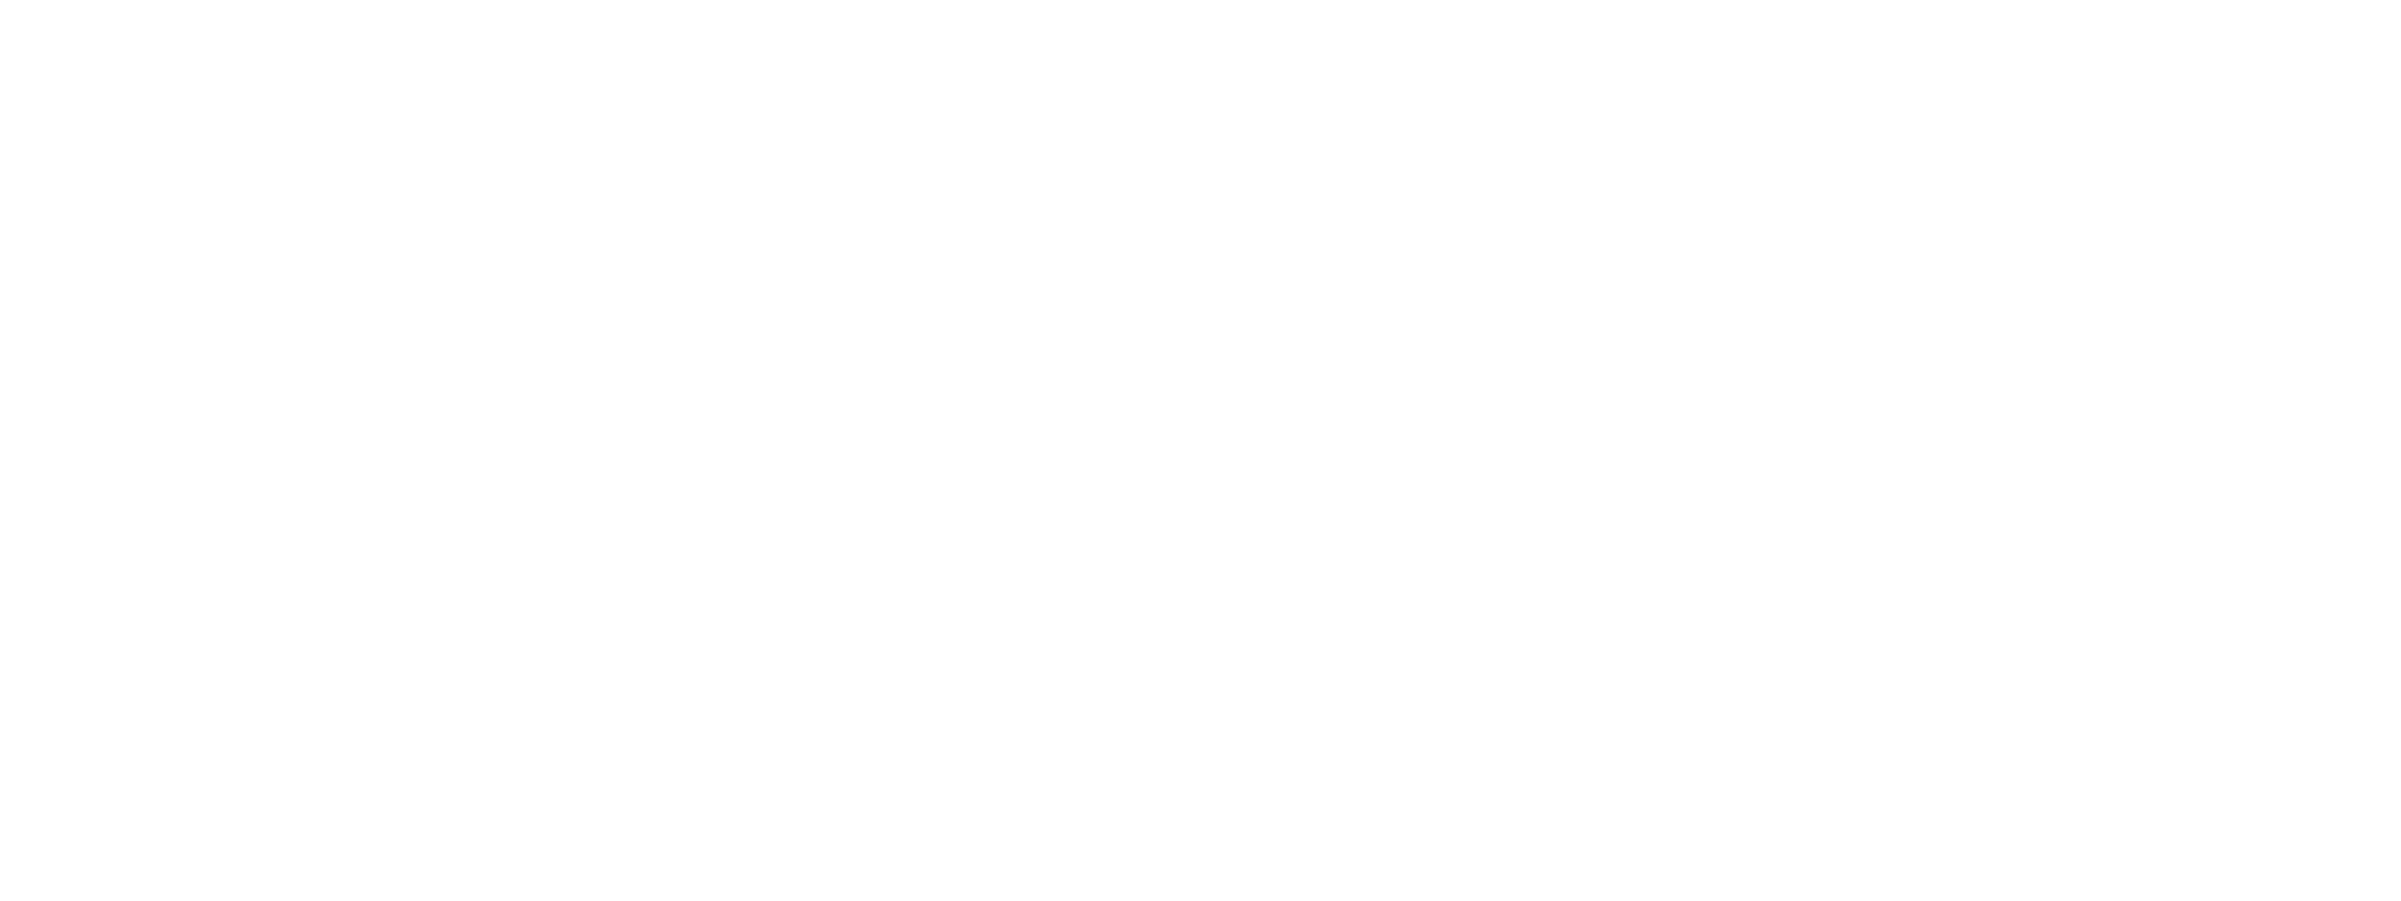 The Matteson logo